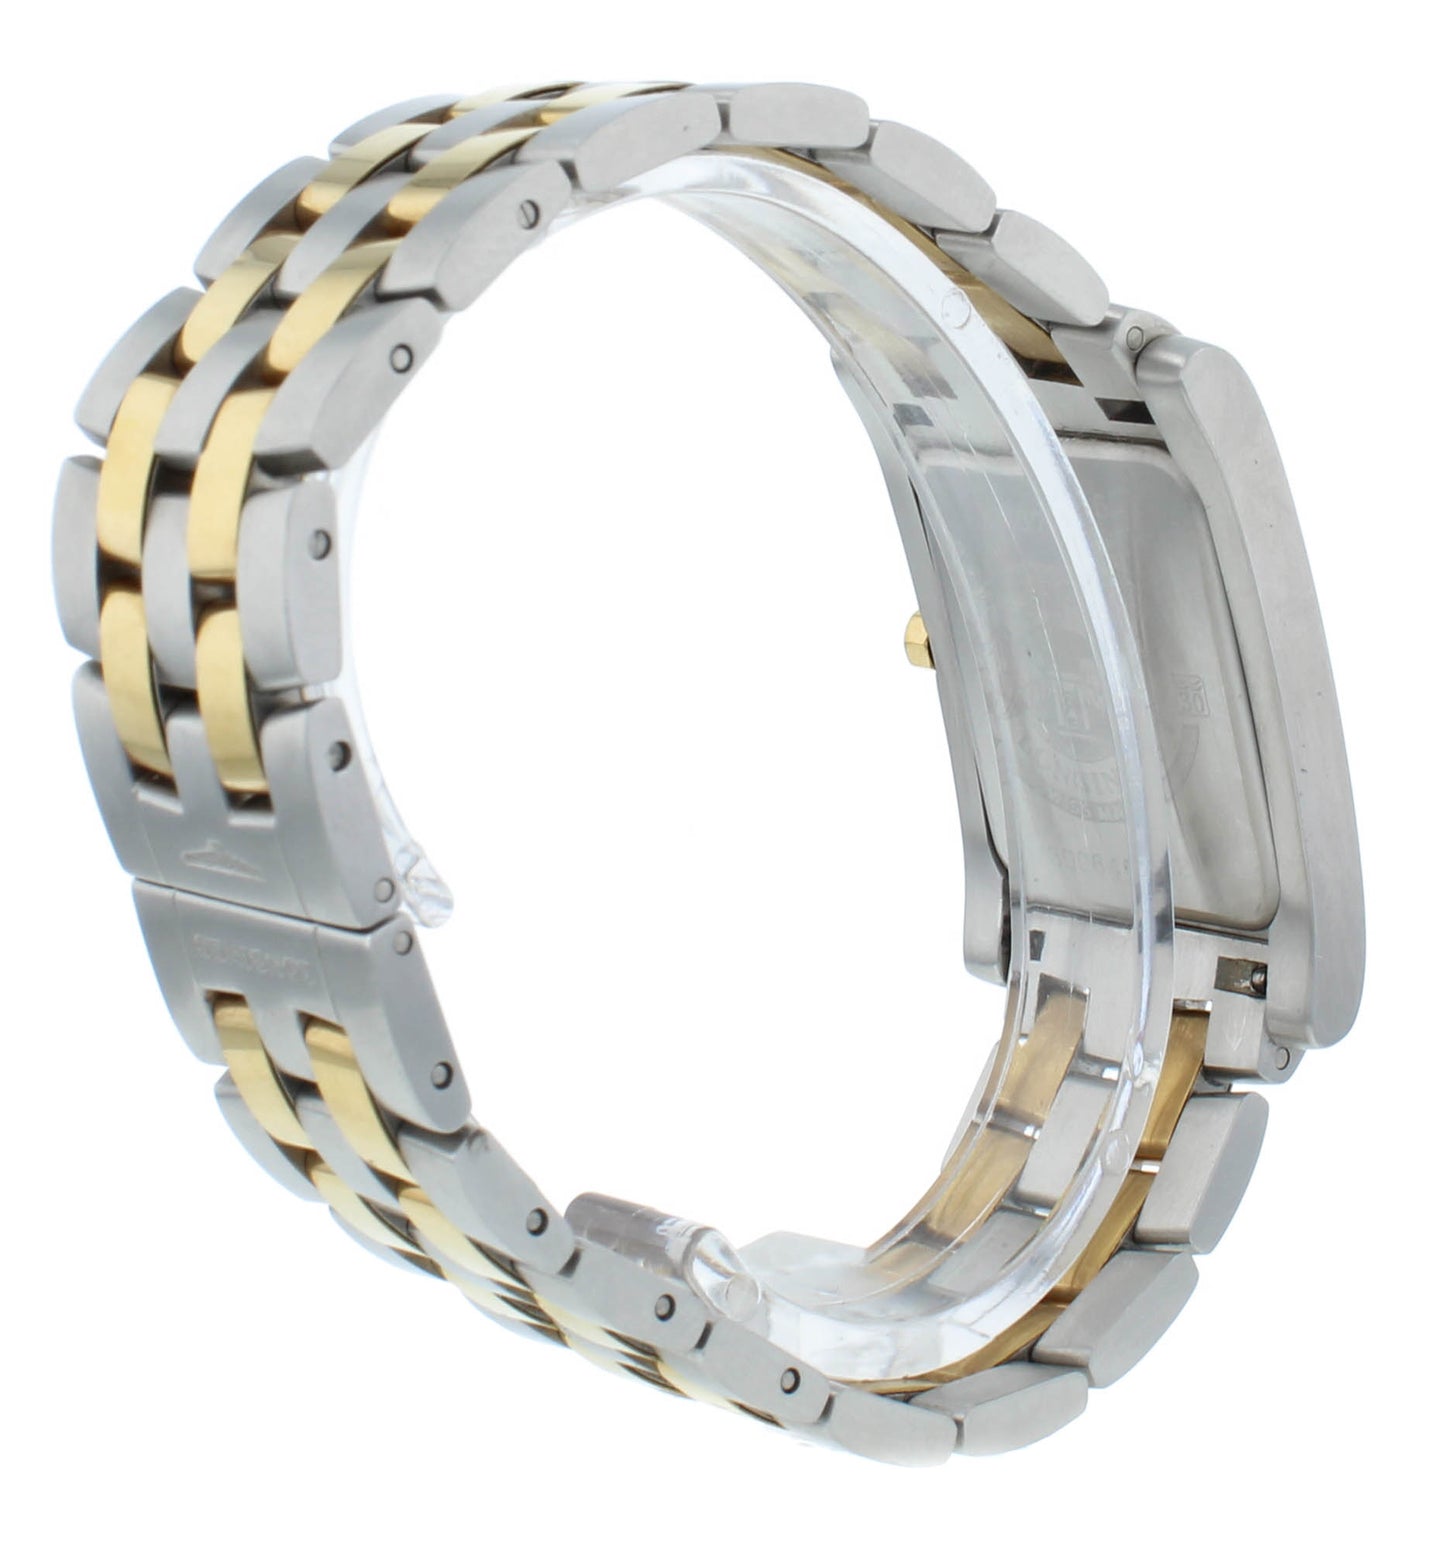 Longines DolceVita 26mm Quartz Steel & 18kt Gold Men's Watch L5.670.5.15.8